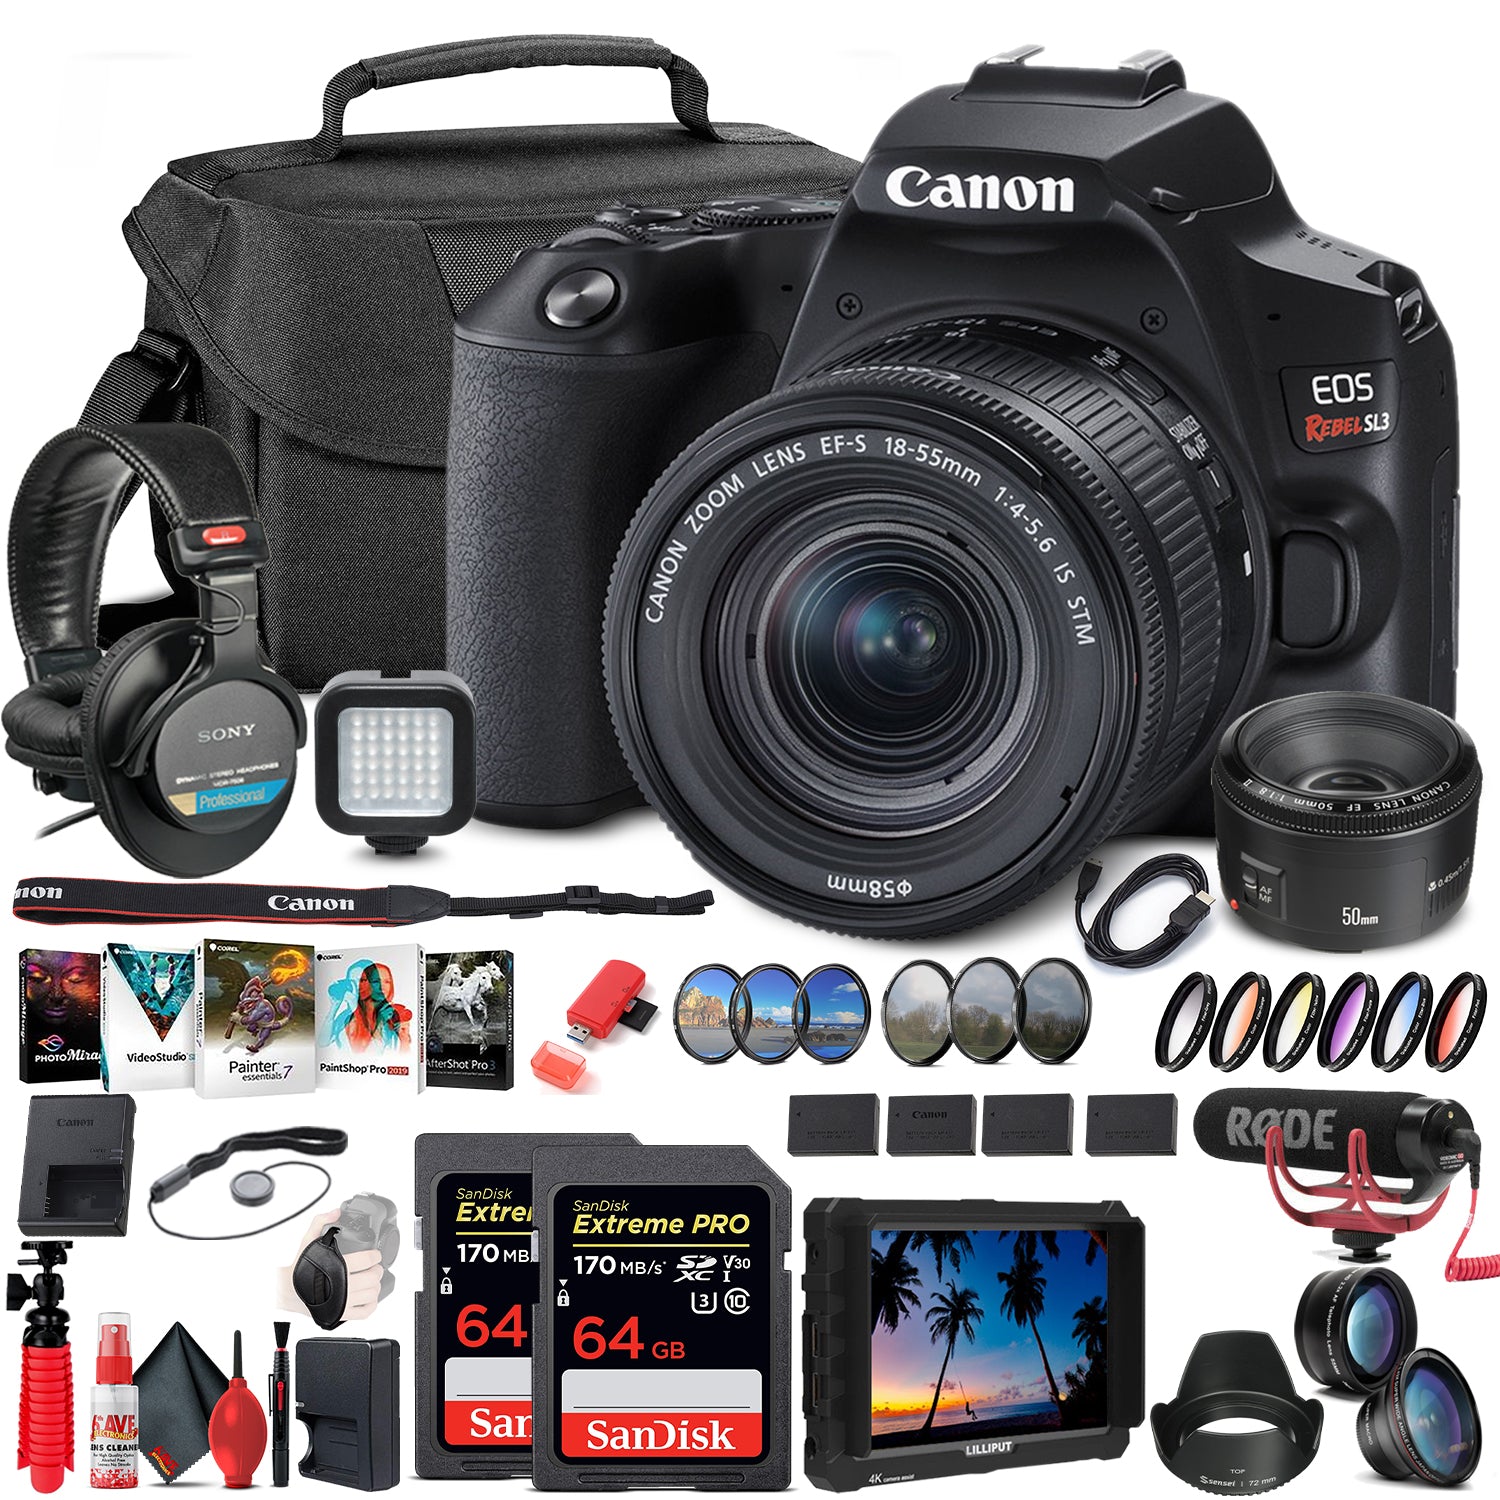 Canon EOS Rebel SL3 DSLR Camera with 18-55mm Lens (Black) (3453C002) Extreme Video Monitor Bundle